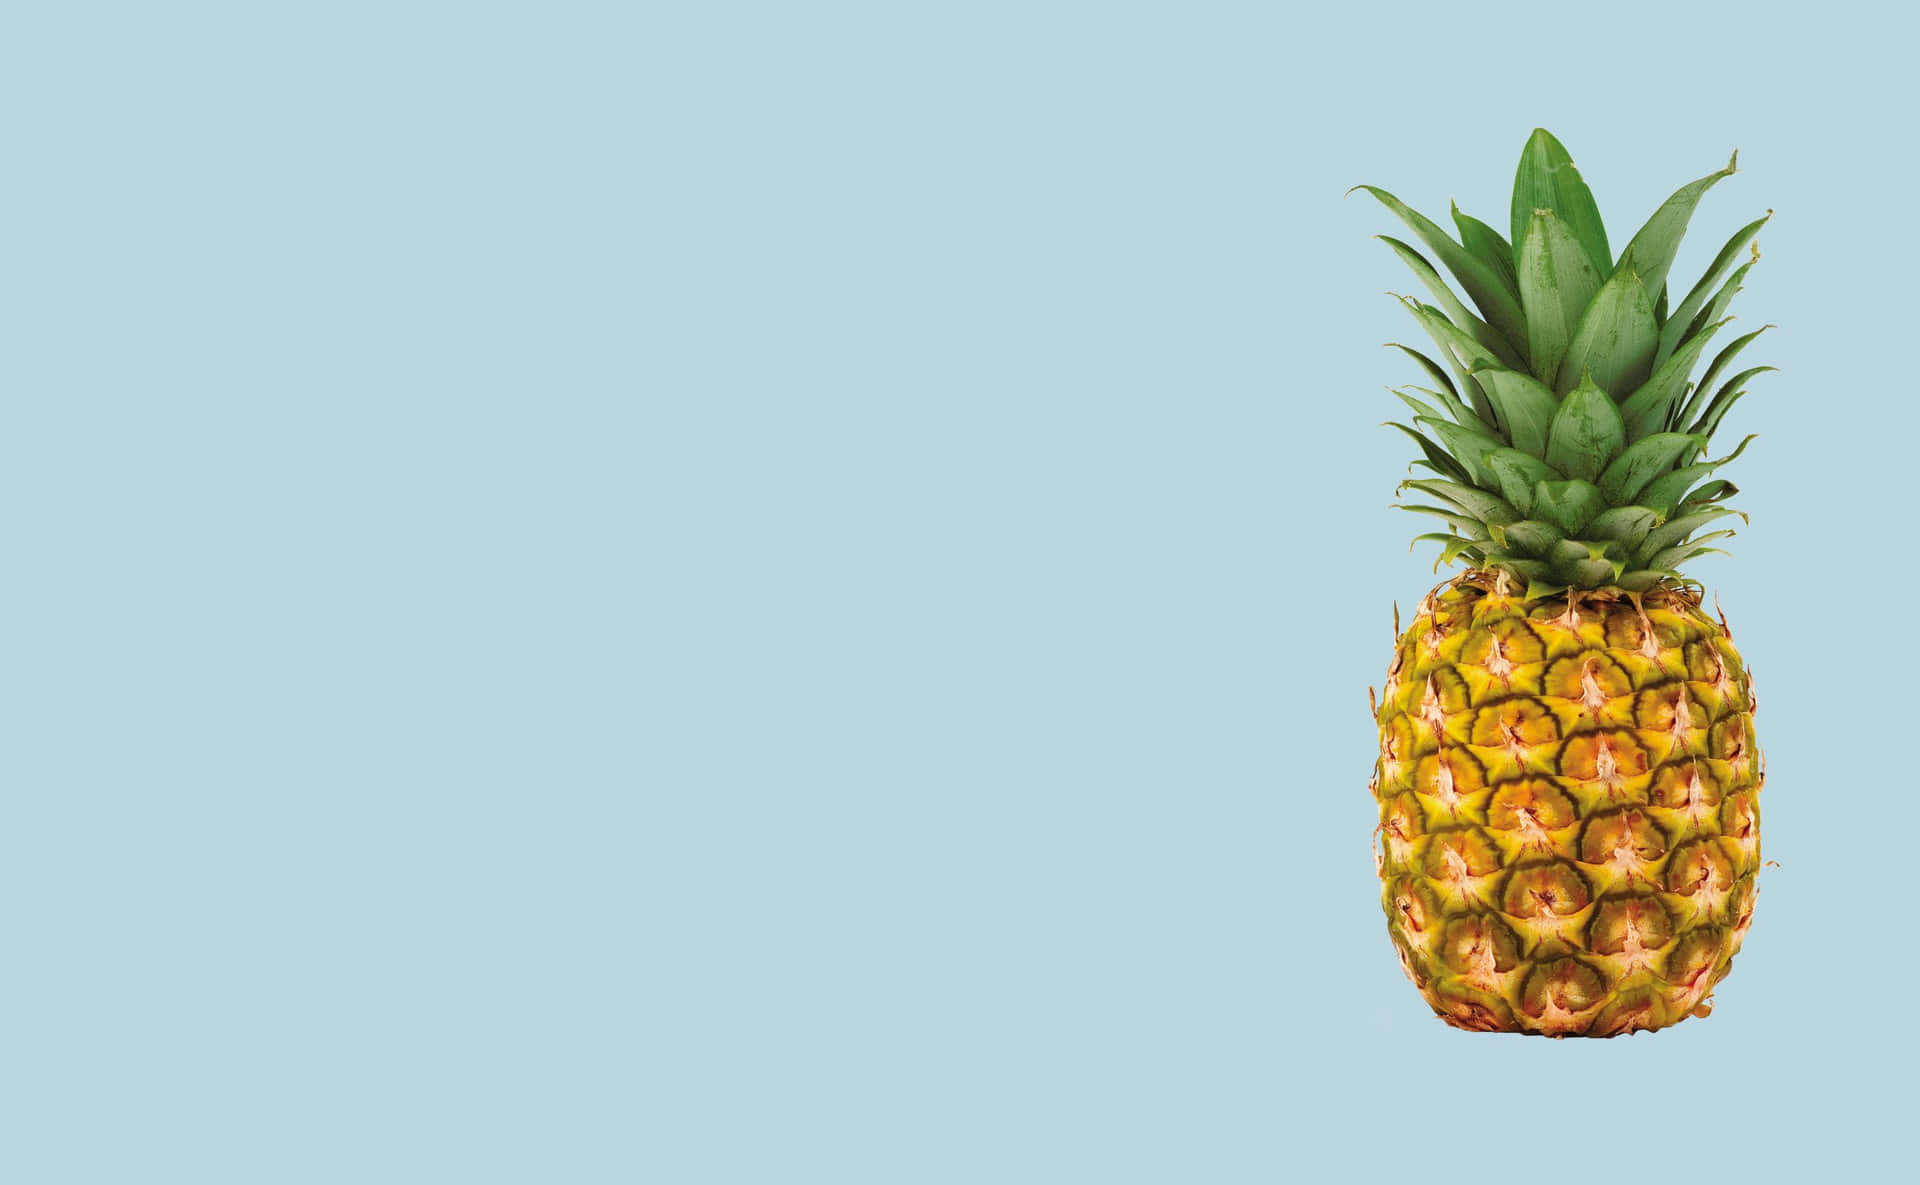 Pineapple Plant Fruit Digital Art Picture